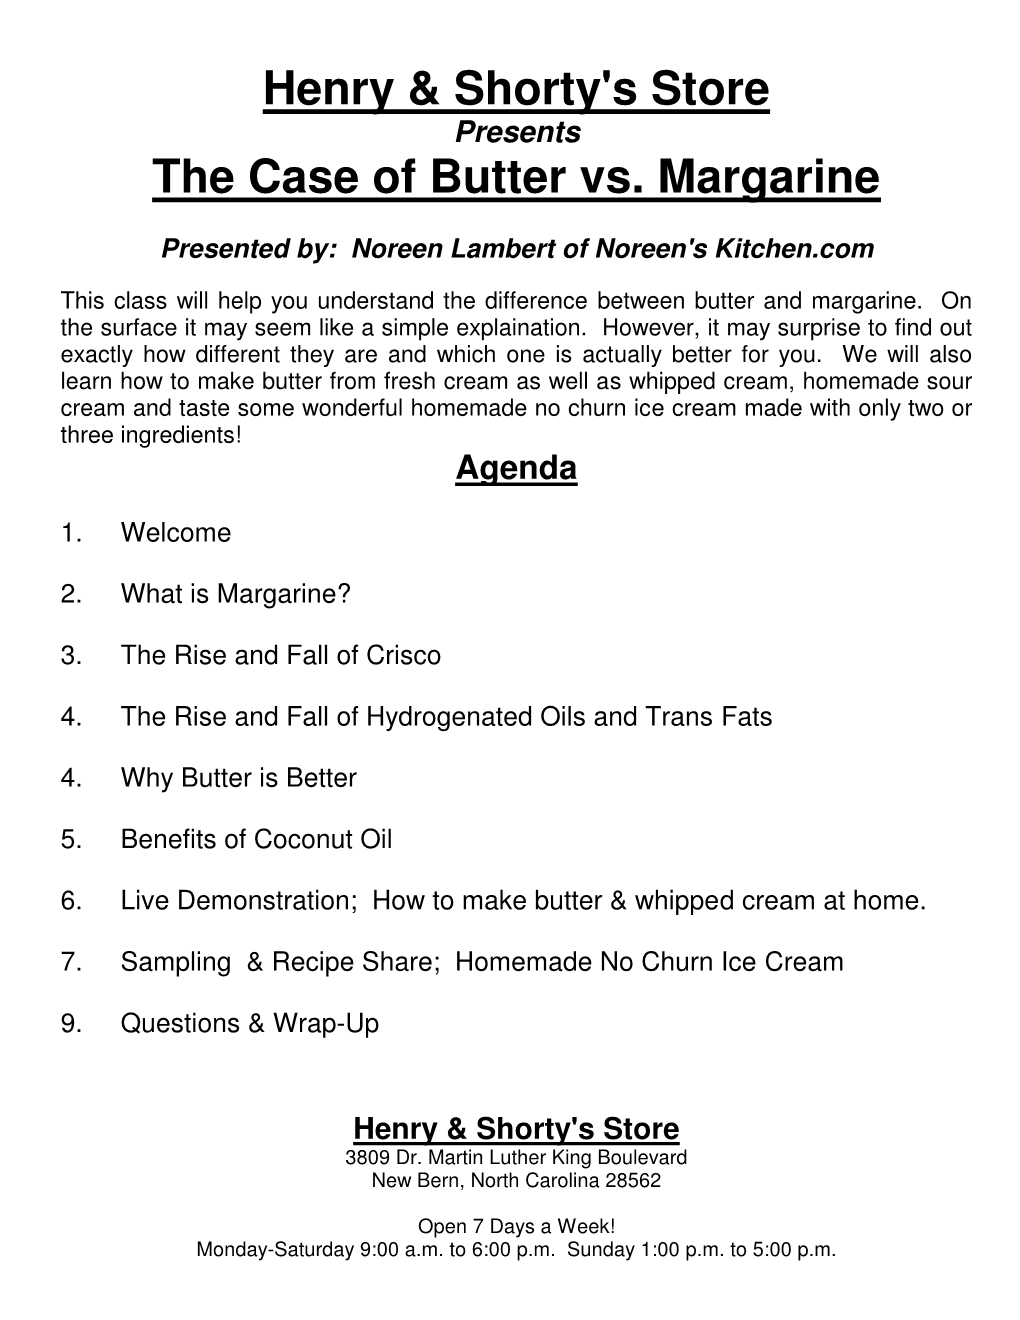 Henry & Shorty's Store the Case of Butter Vs. Margarine